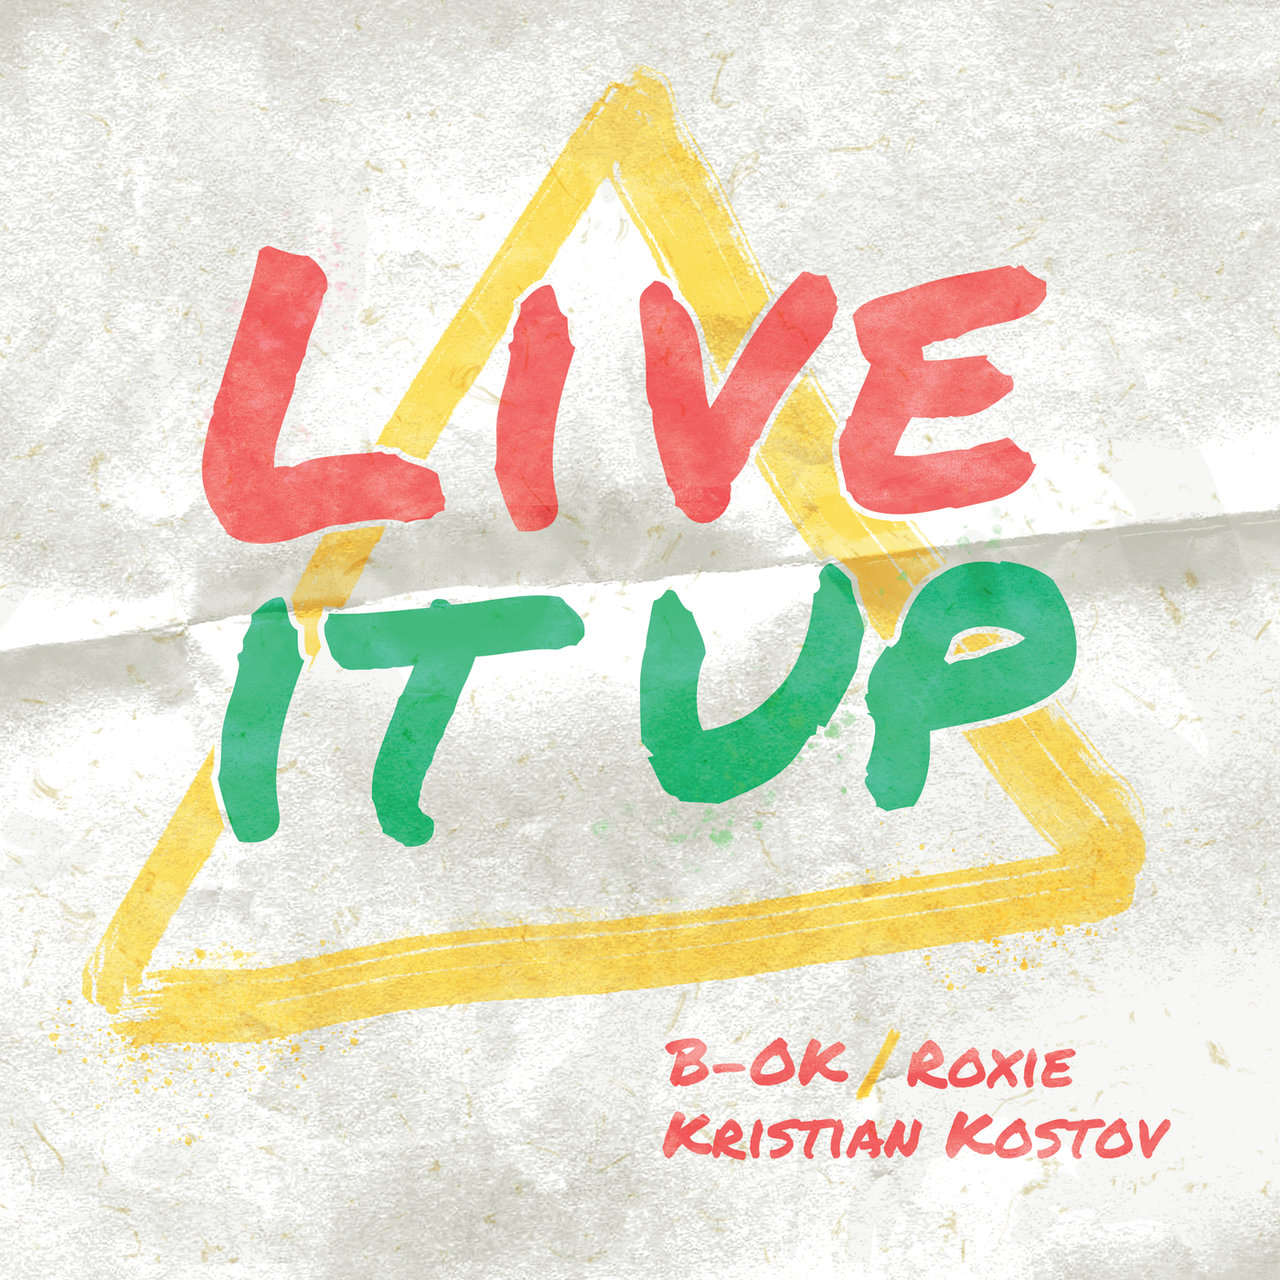 B-OK featuring Roxie Węgiel & Kristian Kostov — Live It Up cover artwork